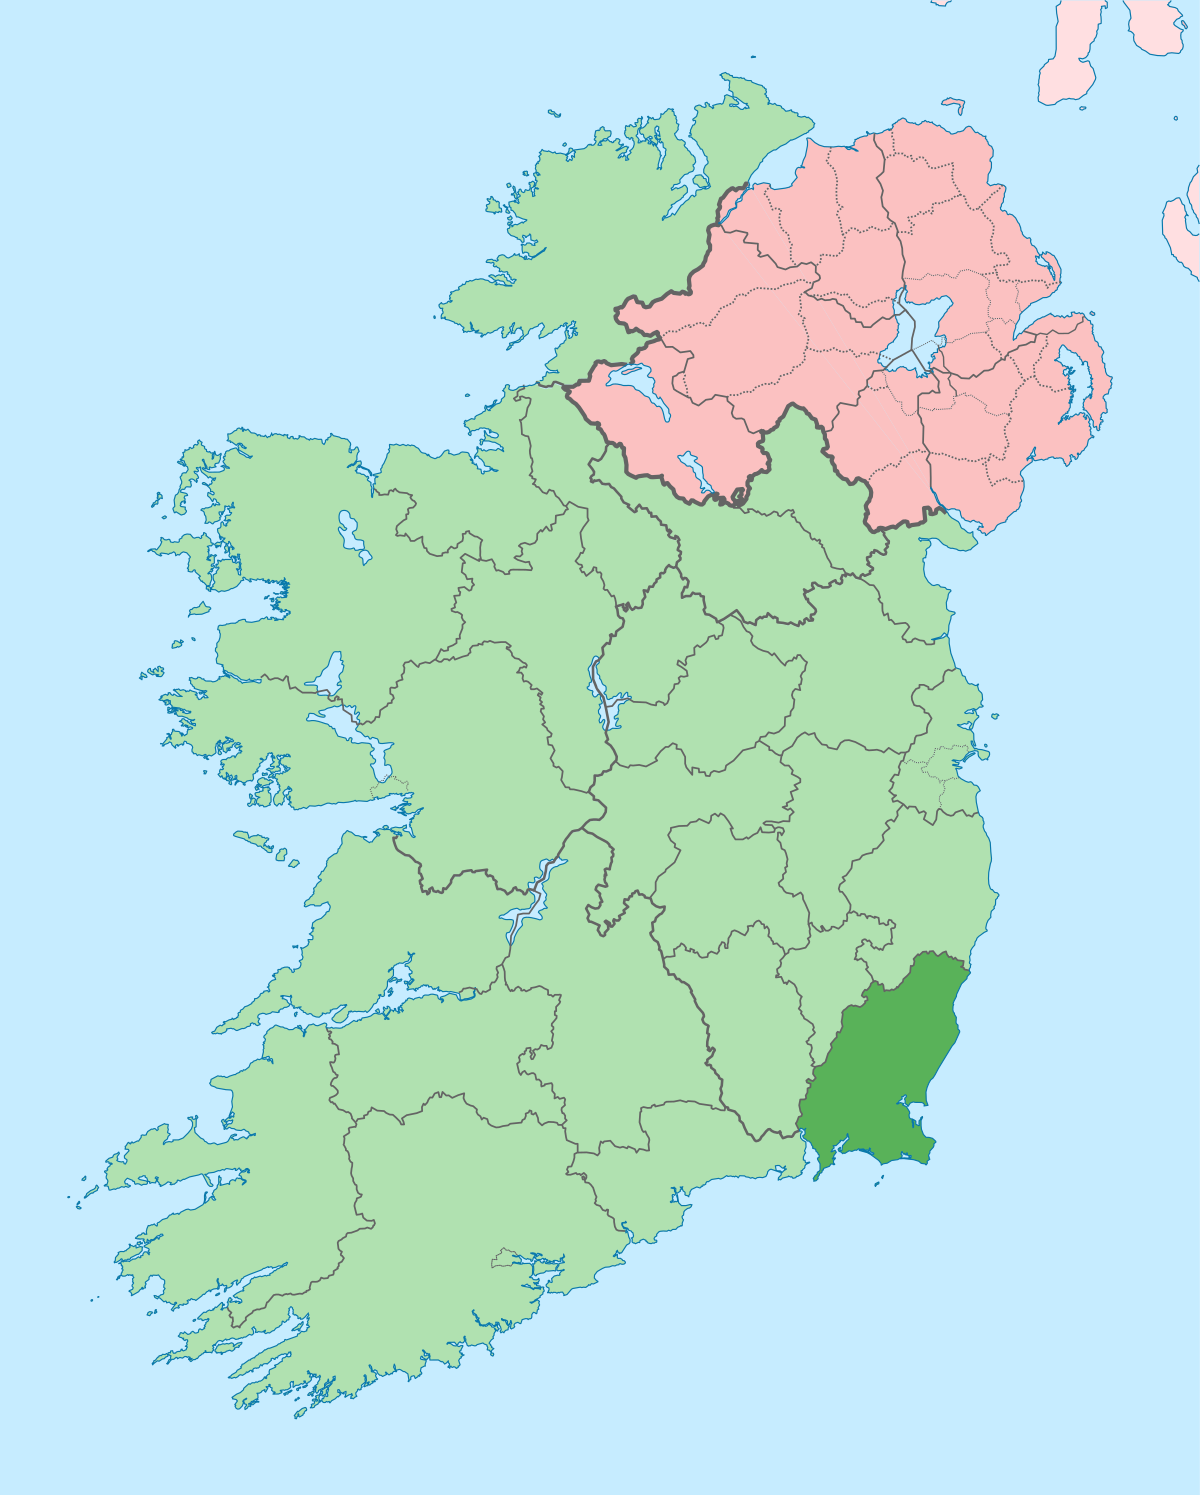 County Wexford (191423) - Wikipedia